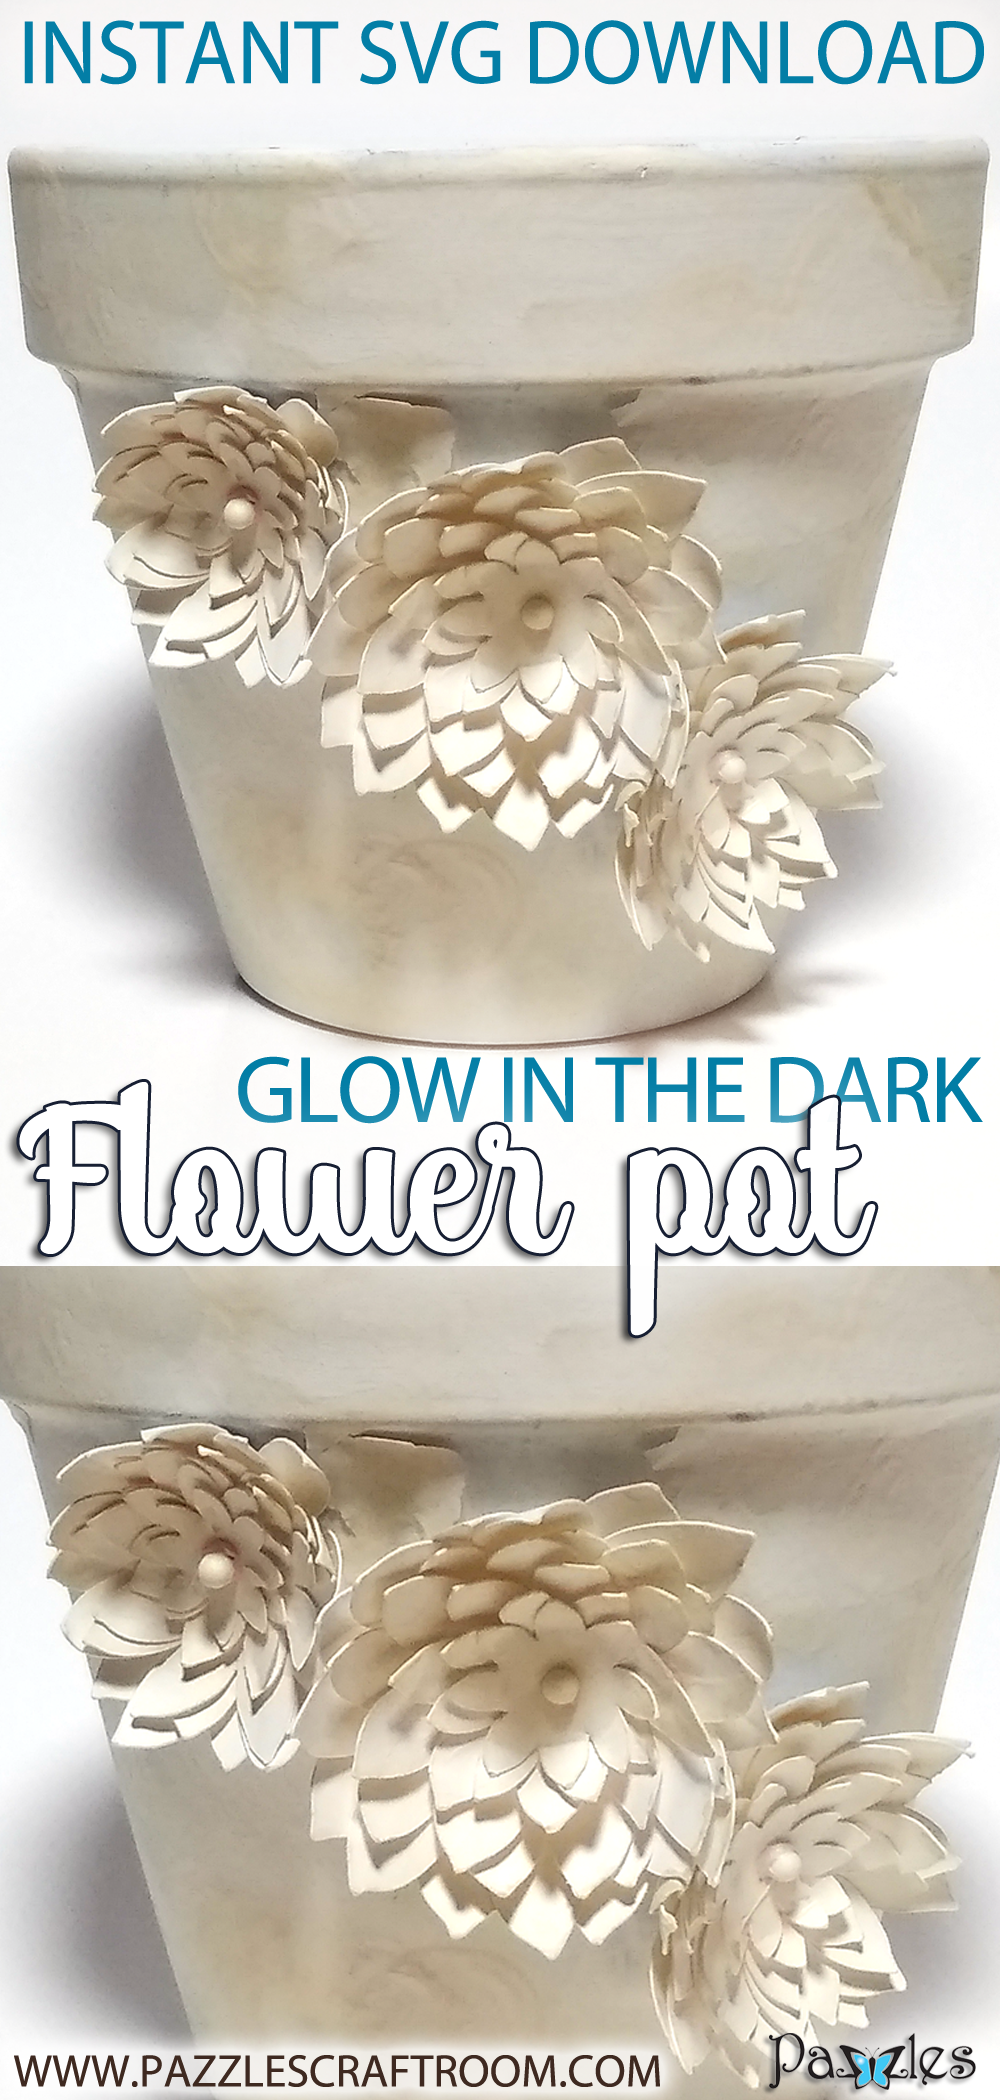 Pazzles DIY Glow in the Dark Vintage Flower Pot with Paper Flowers by Renee Smart